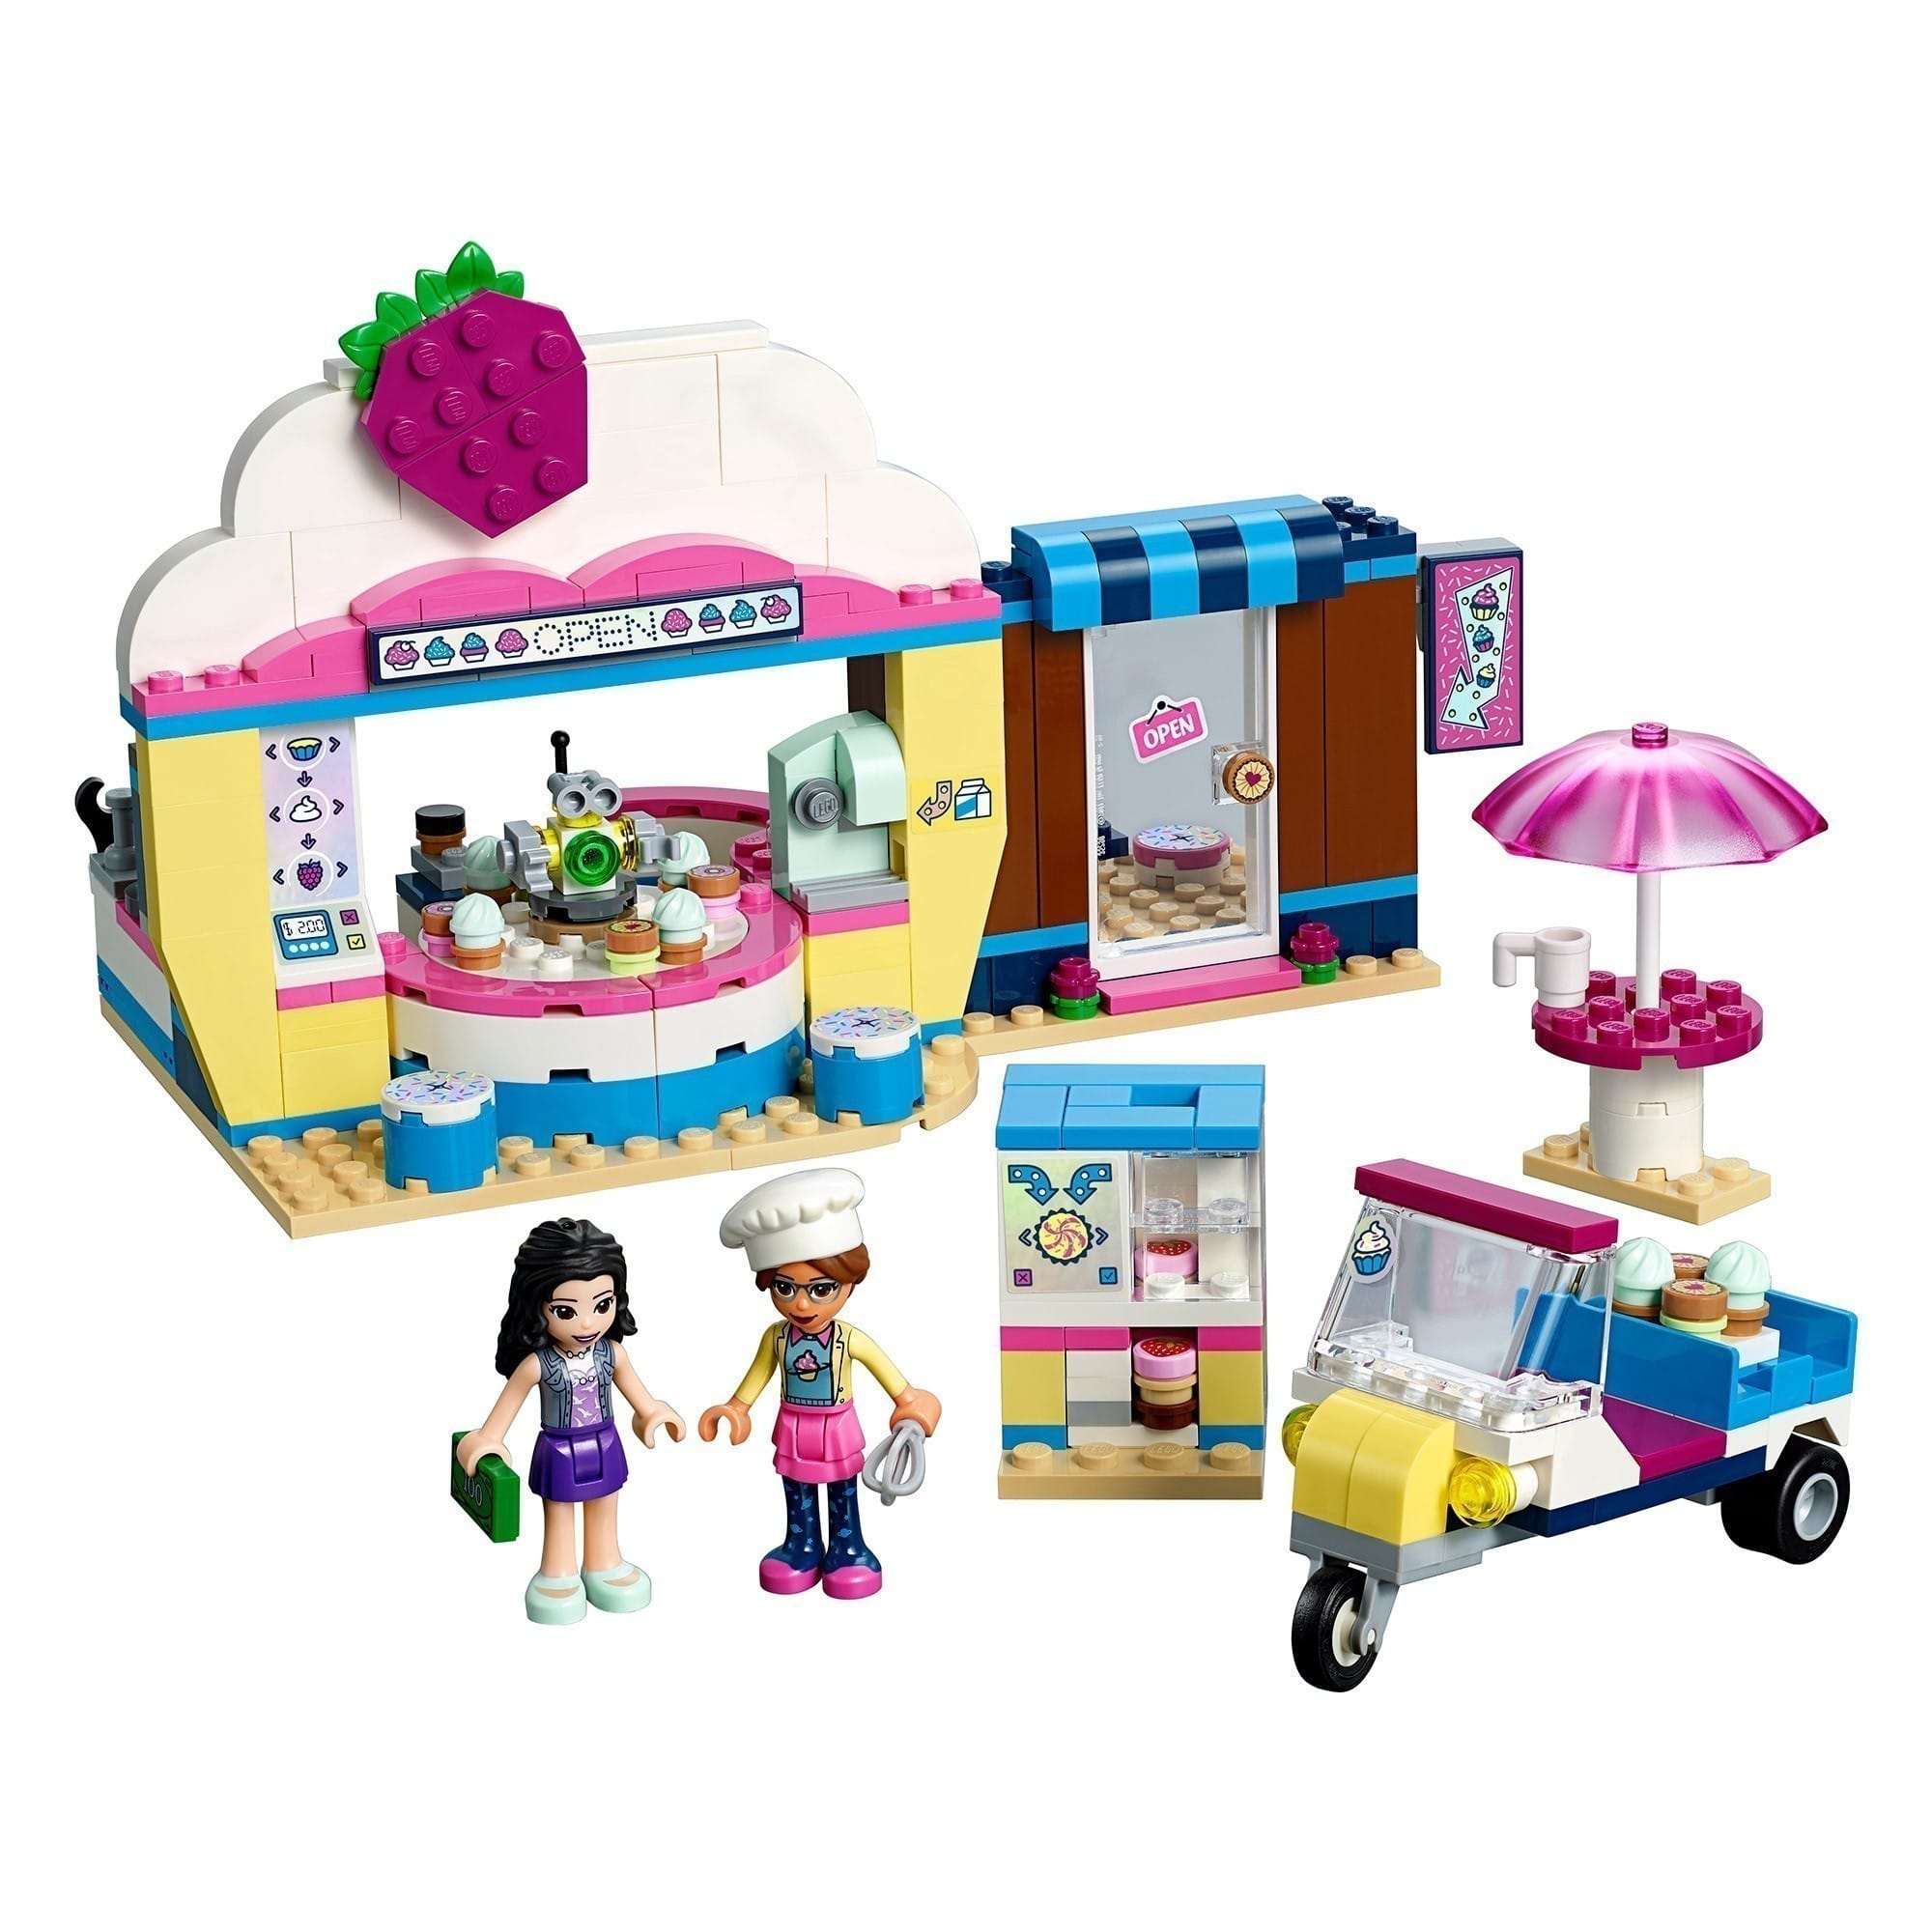 LEGO® Friends™ 41366 - Olivia's Cupcake Cafe